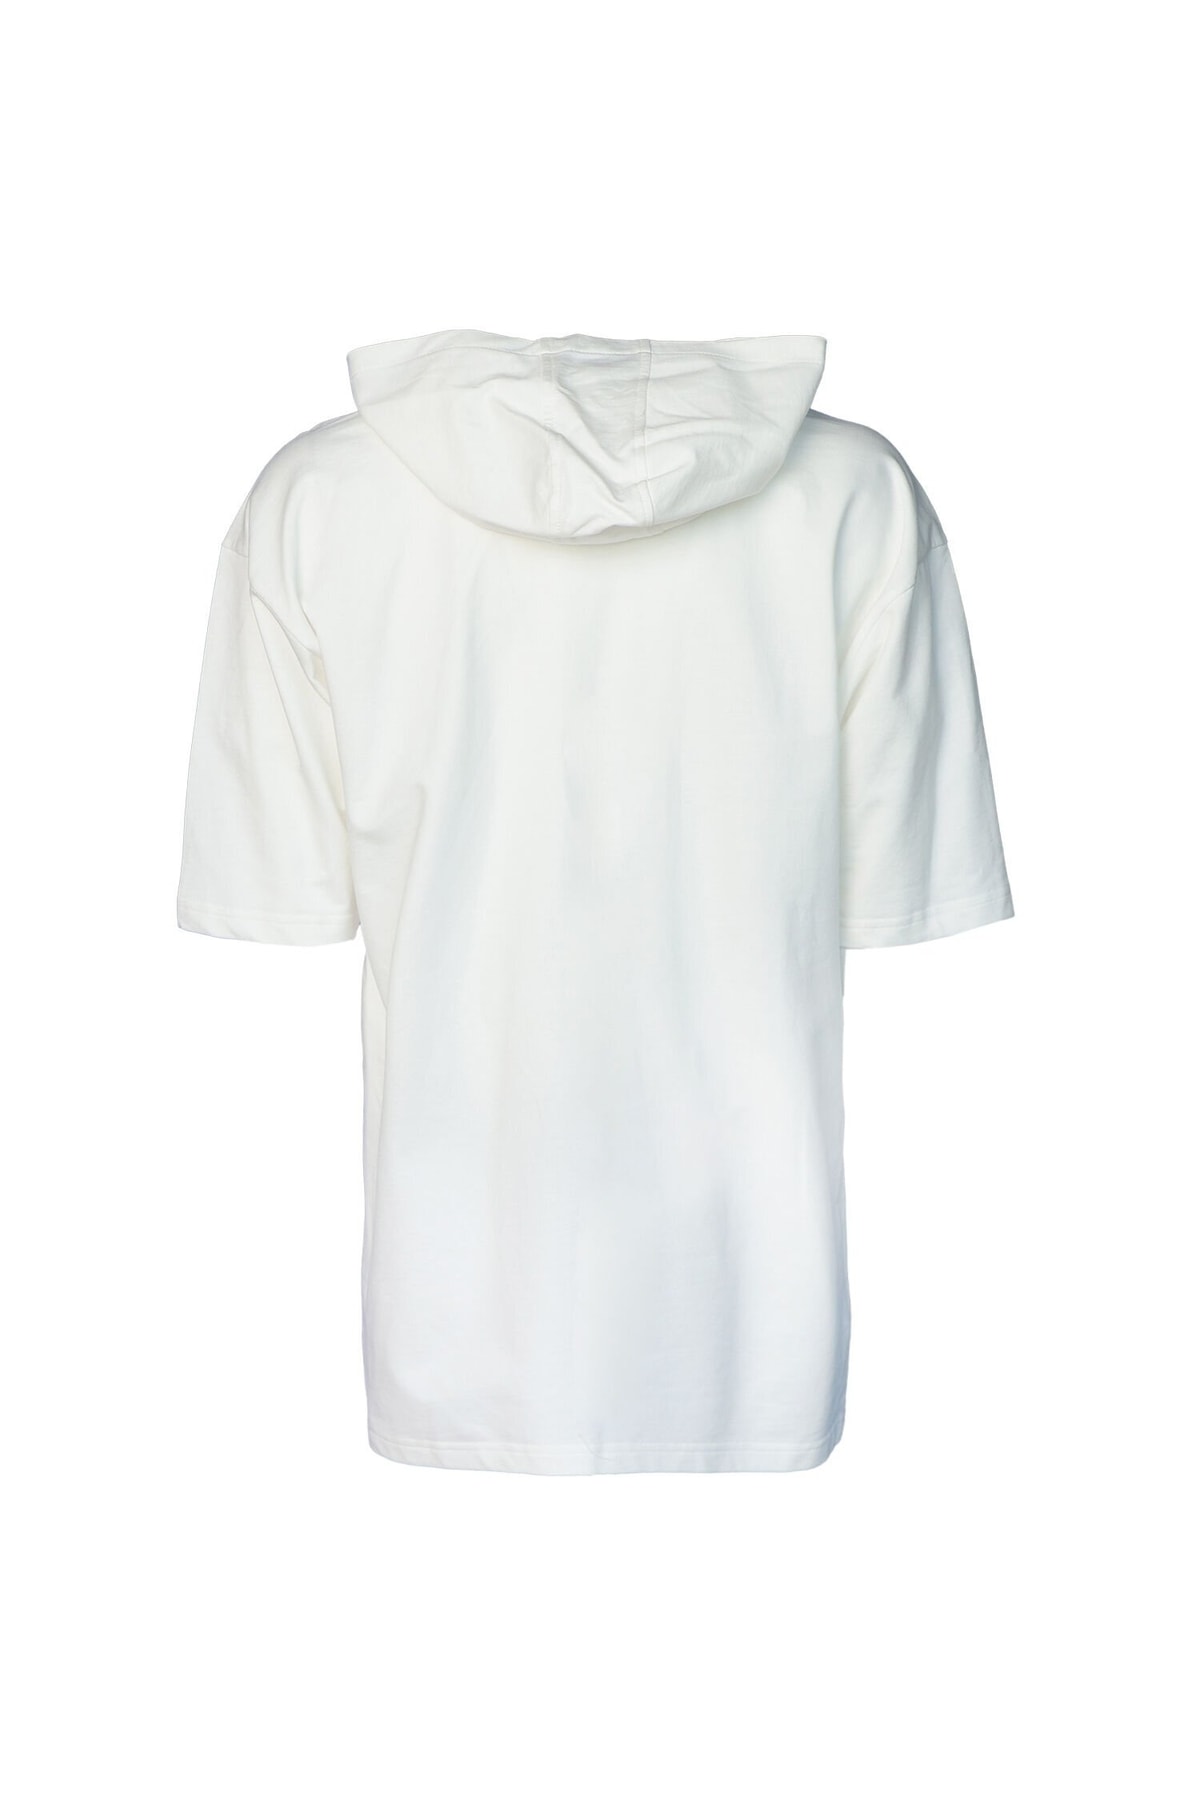 HUMMEL تیشرت کلاهدار مردانه کیپی به رنگ سفید